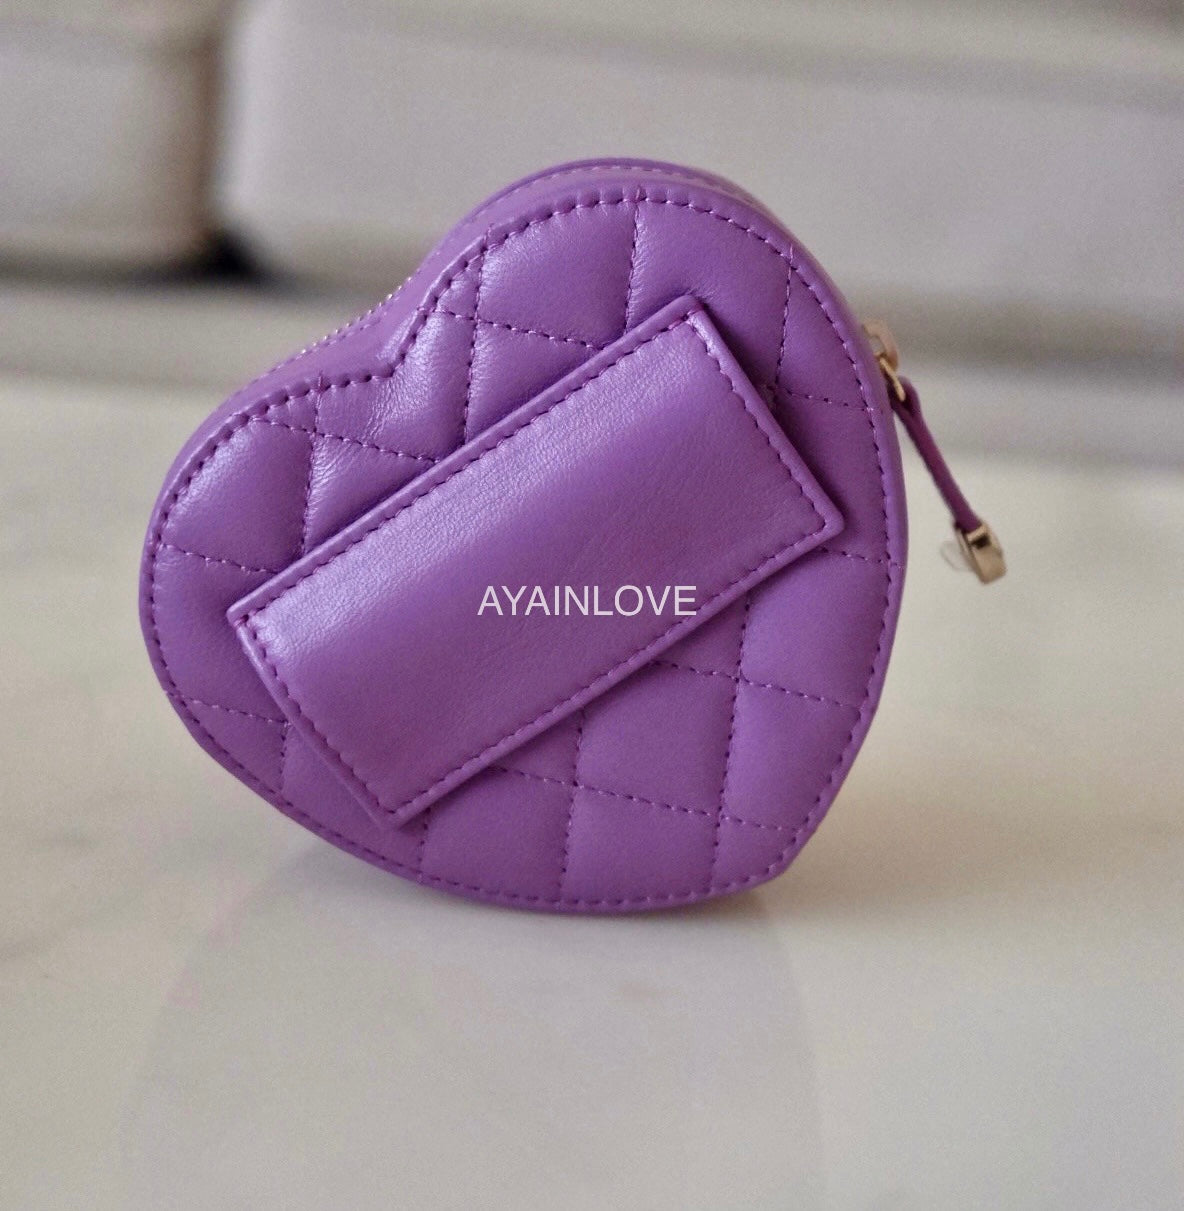 CHANEL, Bags, Chanel 22s Heart Bag Heart Belt Bag Heart Crossbody Bag  Rare Runaway Mini Bag